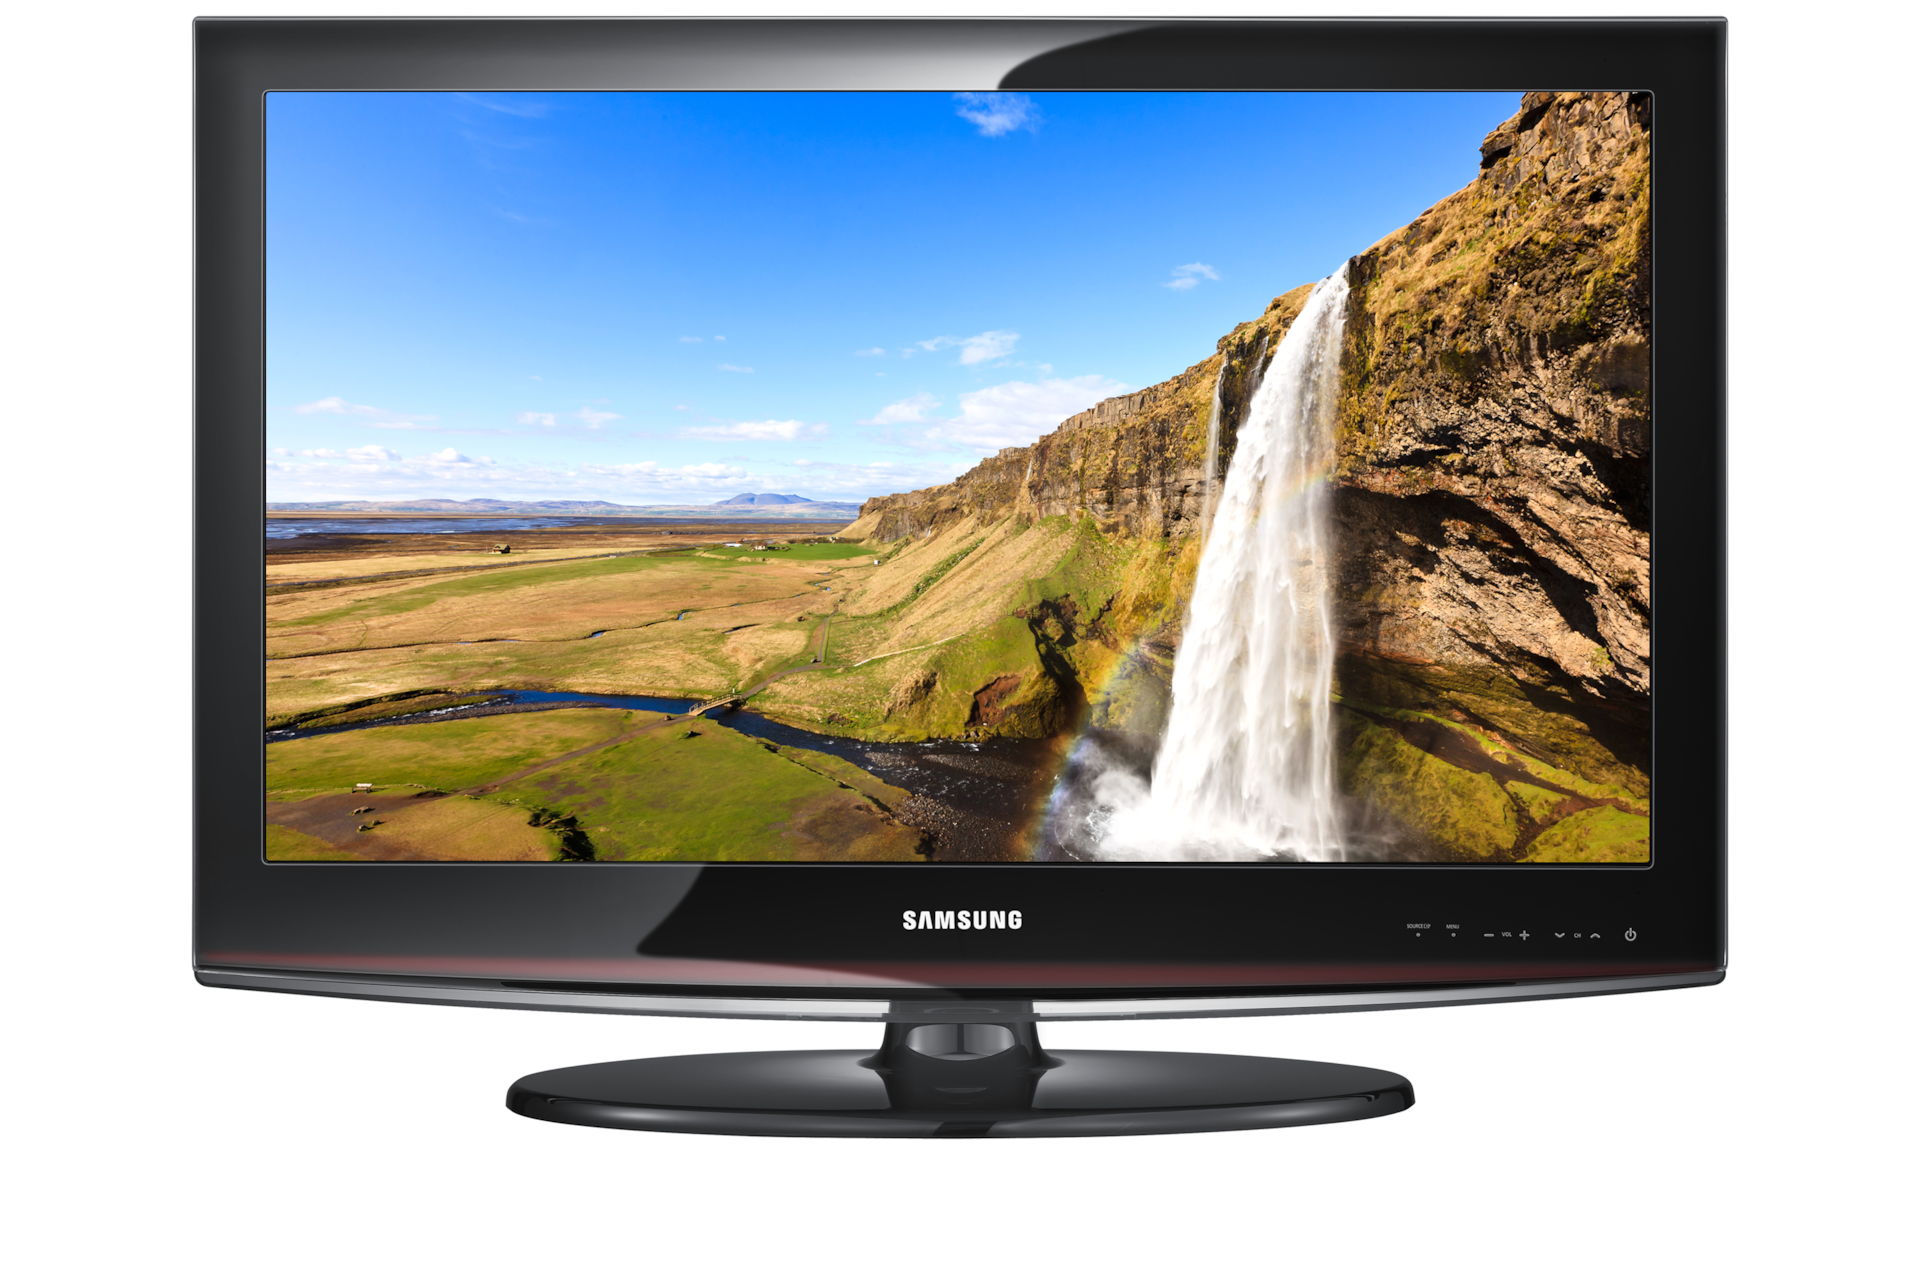 Жк телевизор 32 дюйма куплю. Le32d550k1w. Samsung le32d550k1w. Телевизор Samsung le-37b530p7 37". Телевизор Samsung le-40c530 40".